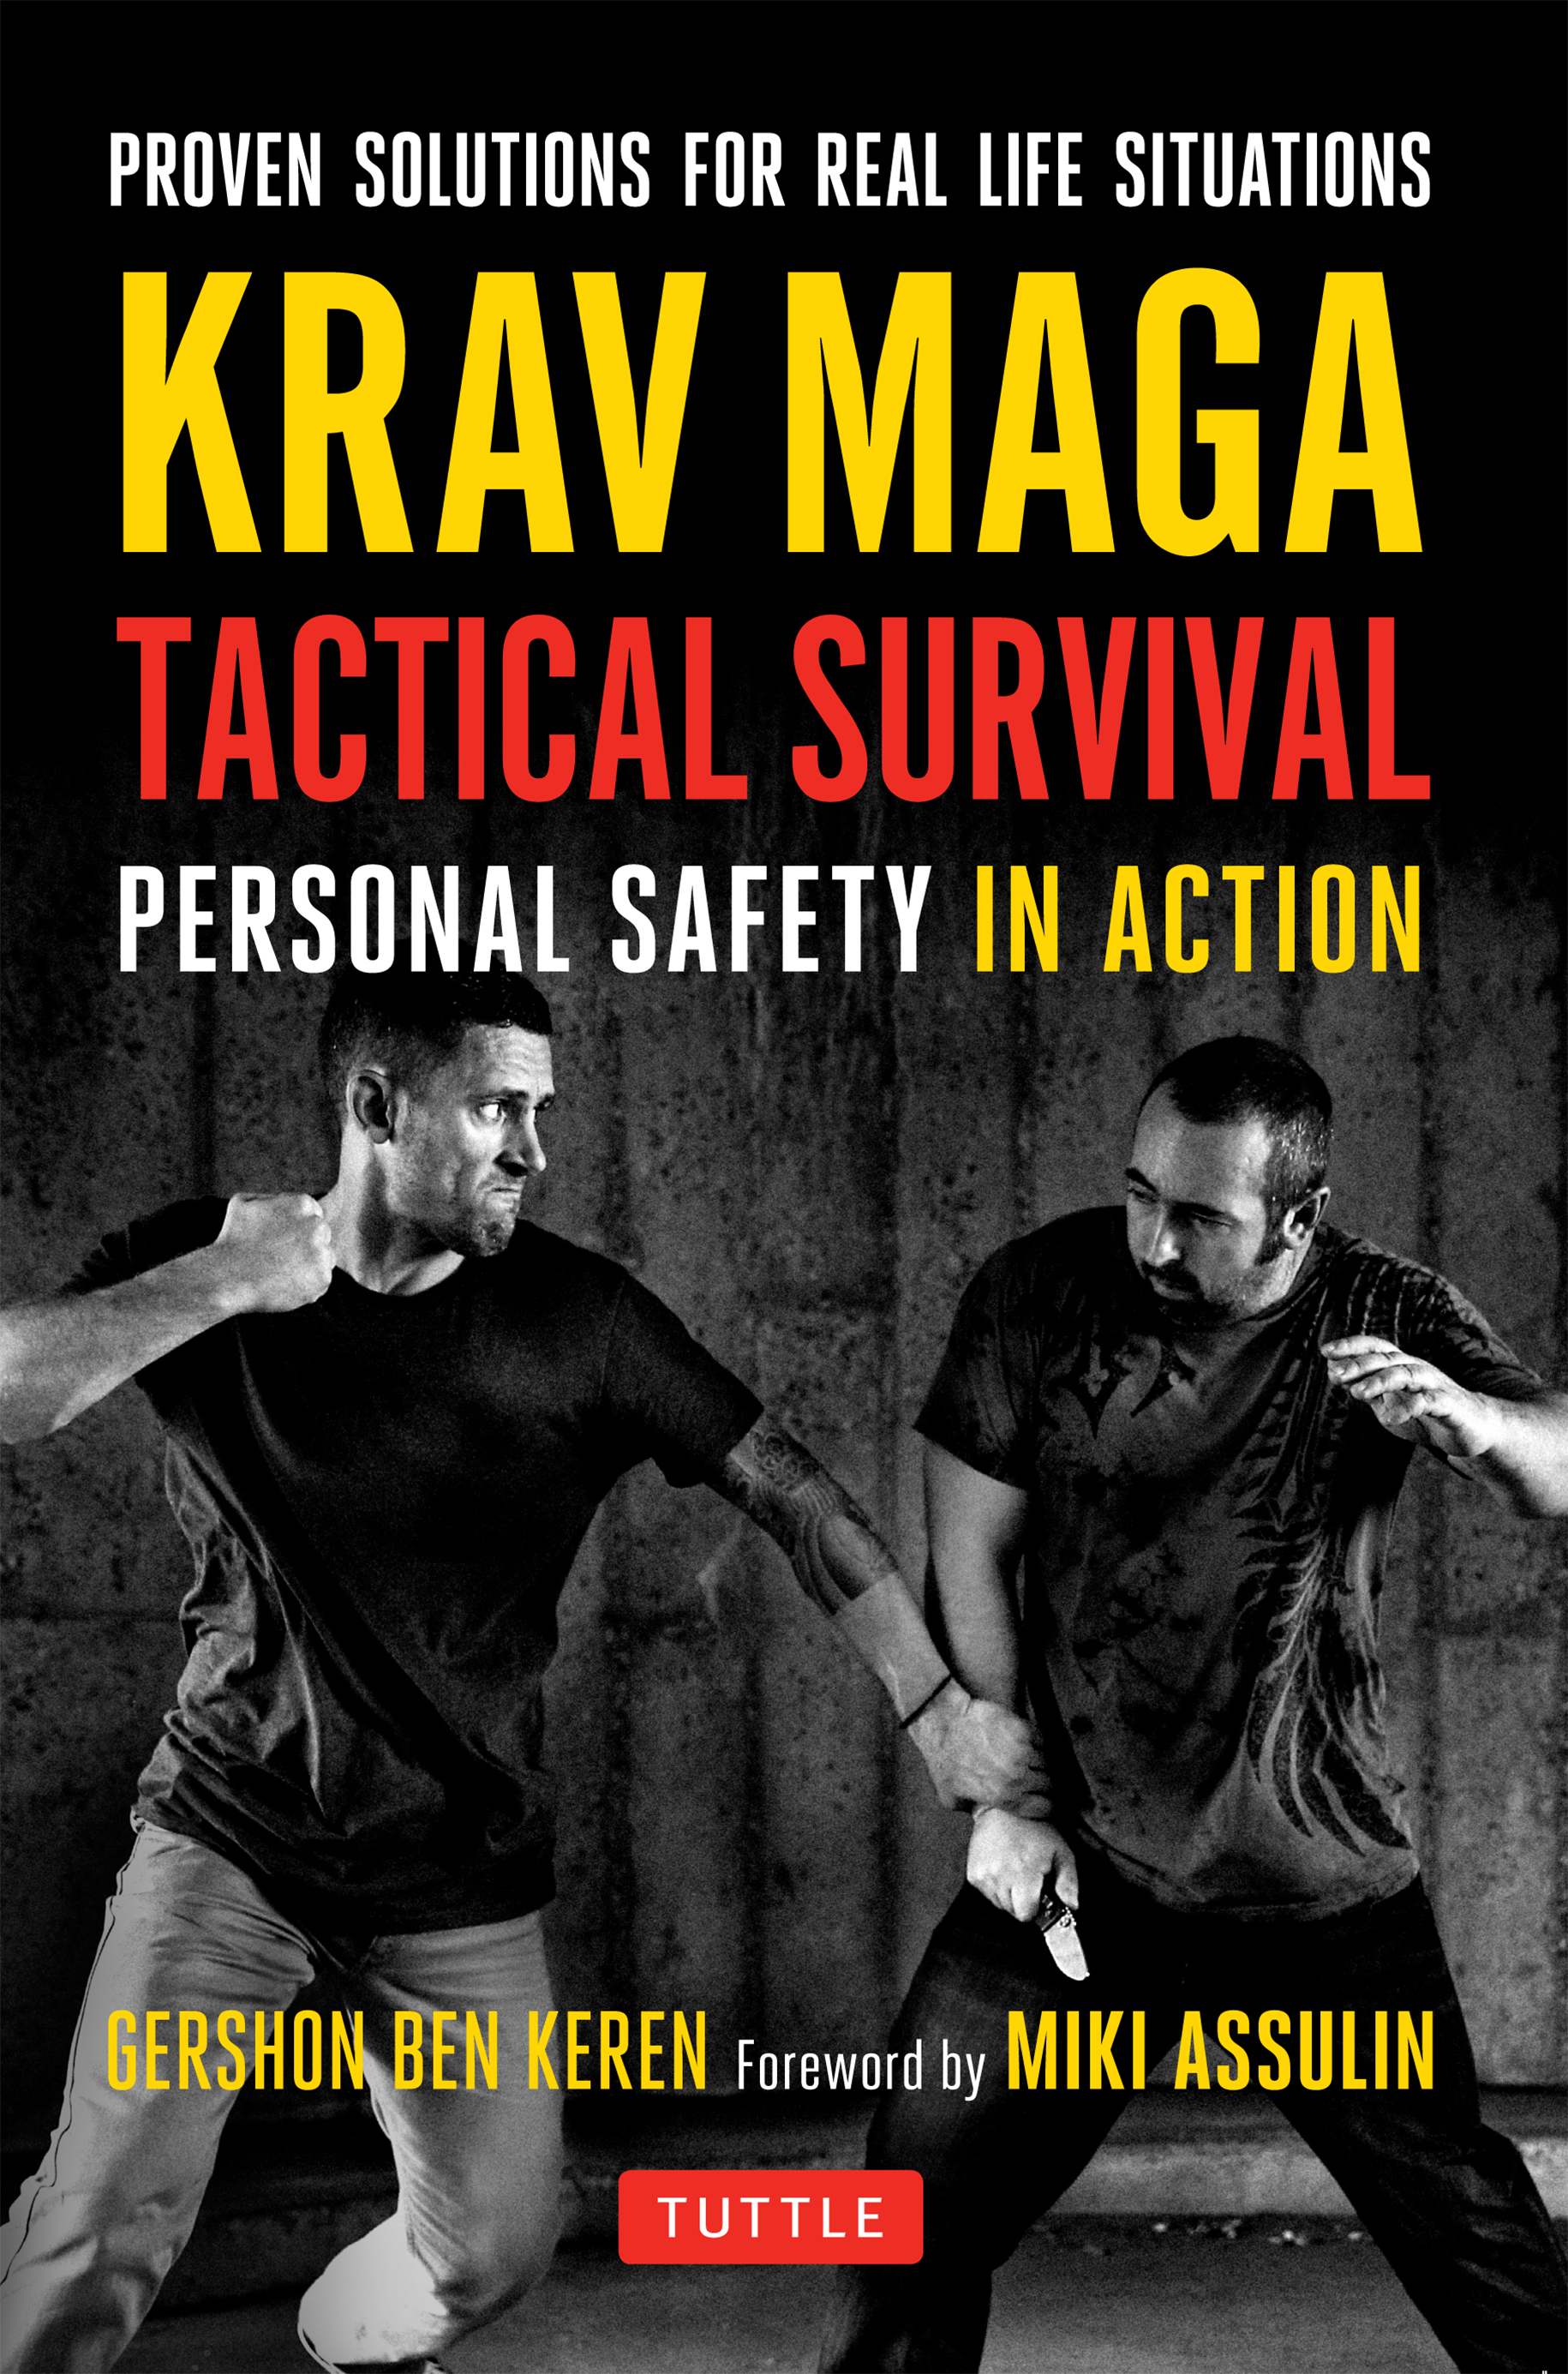 Krav Maga - Real World Solutions To Real World Violence